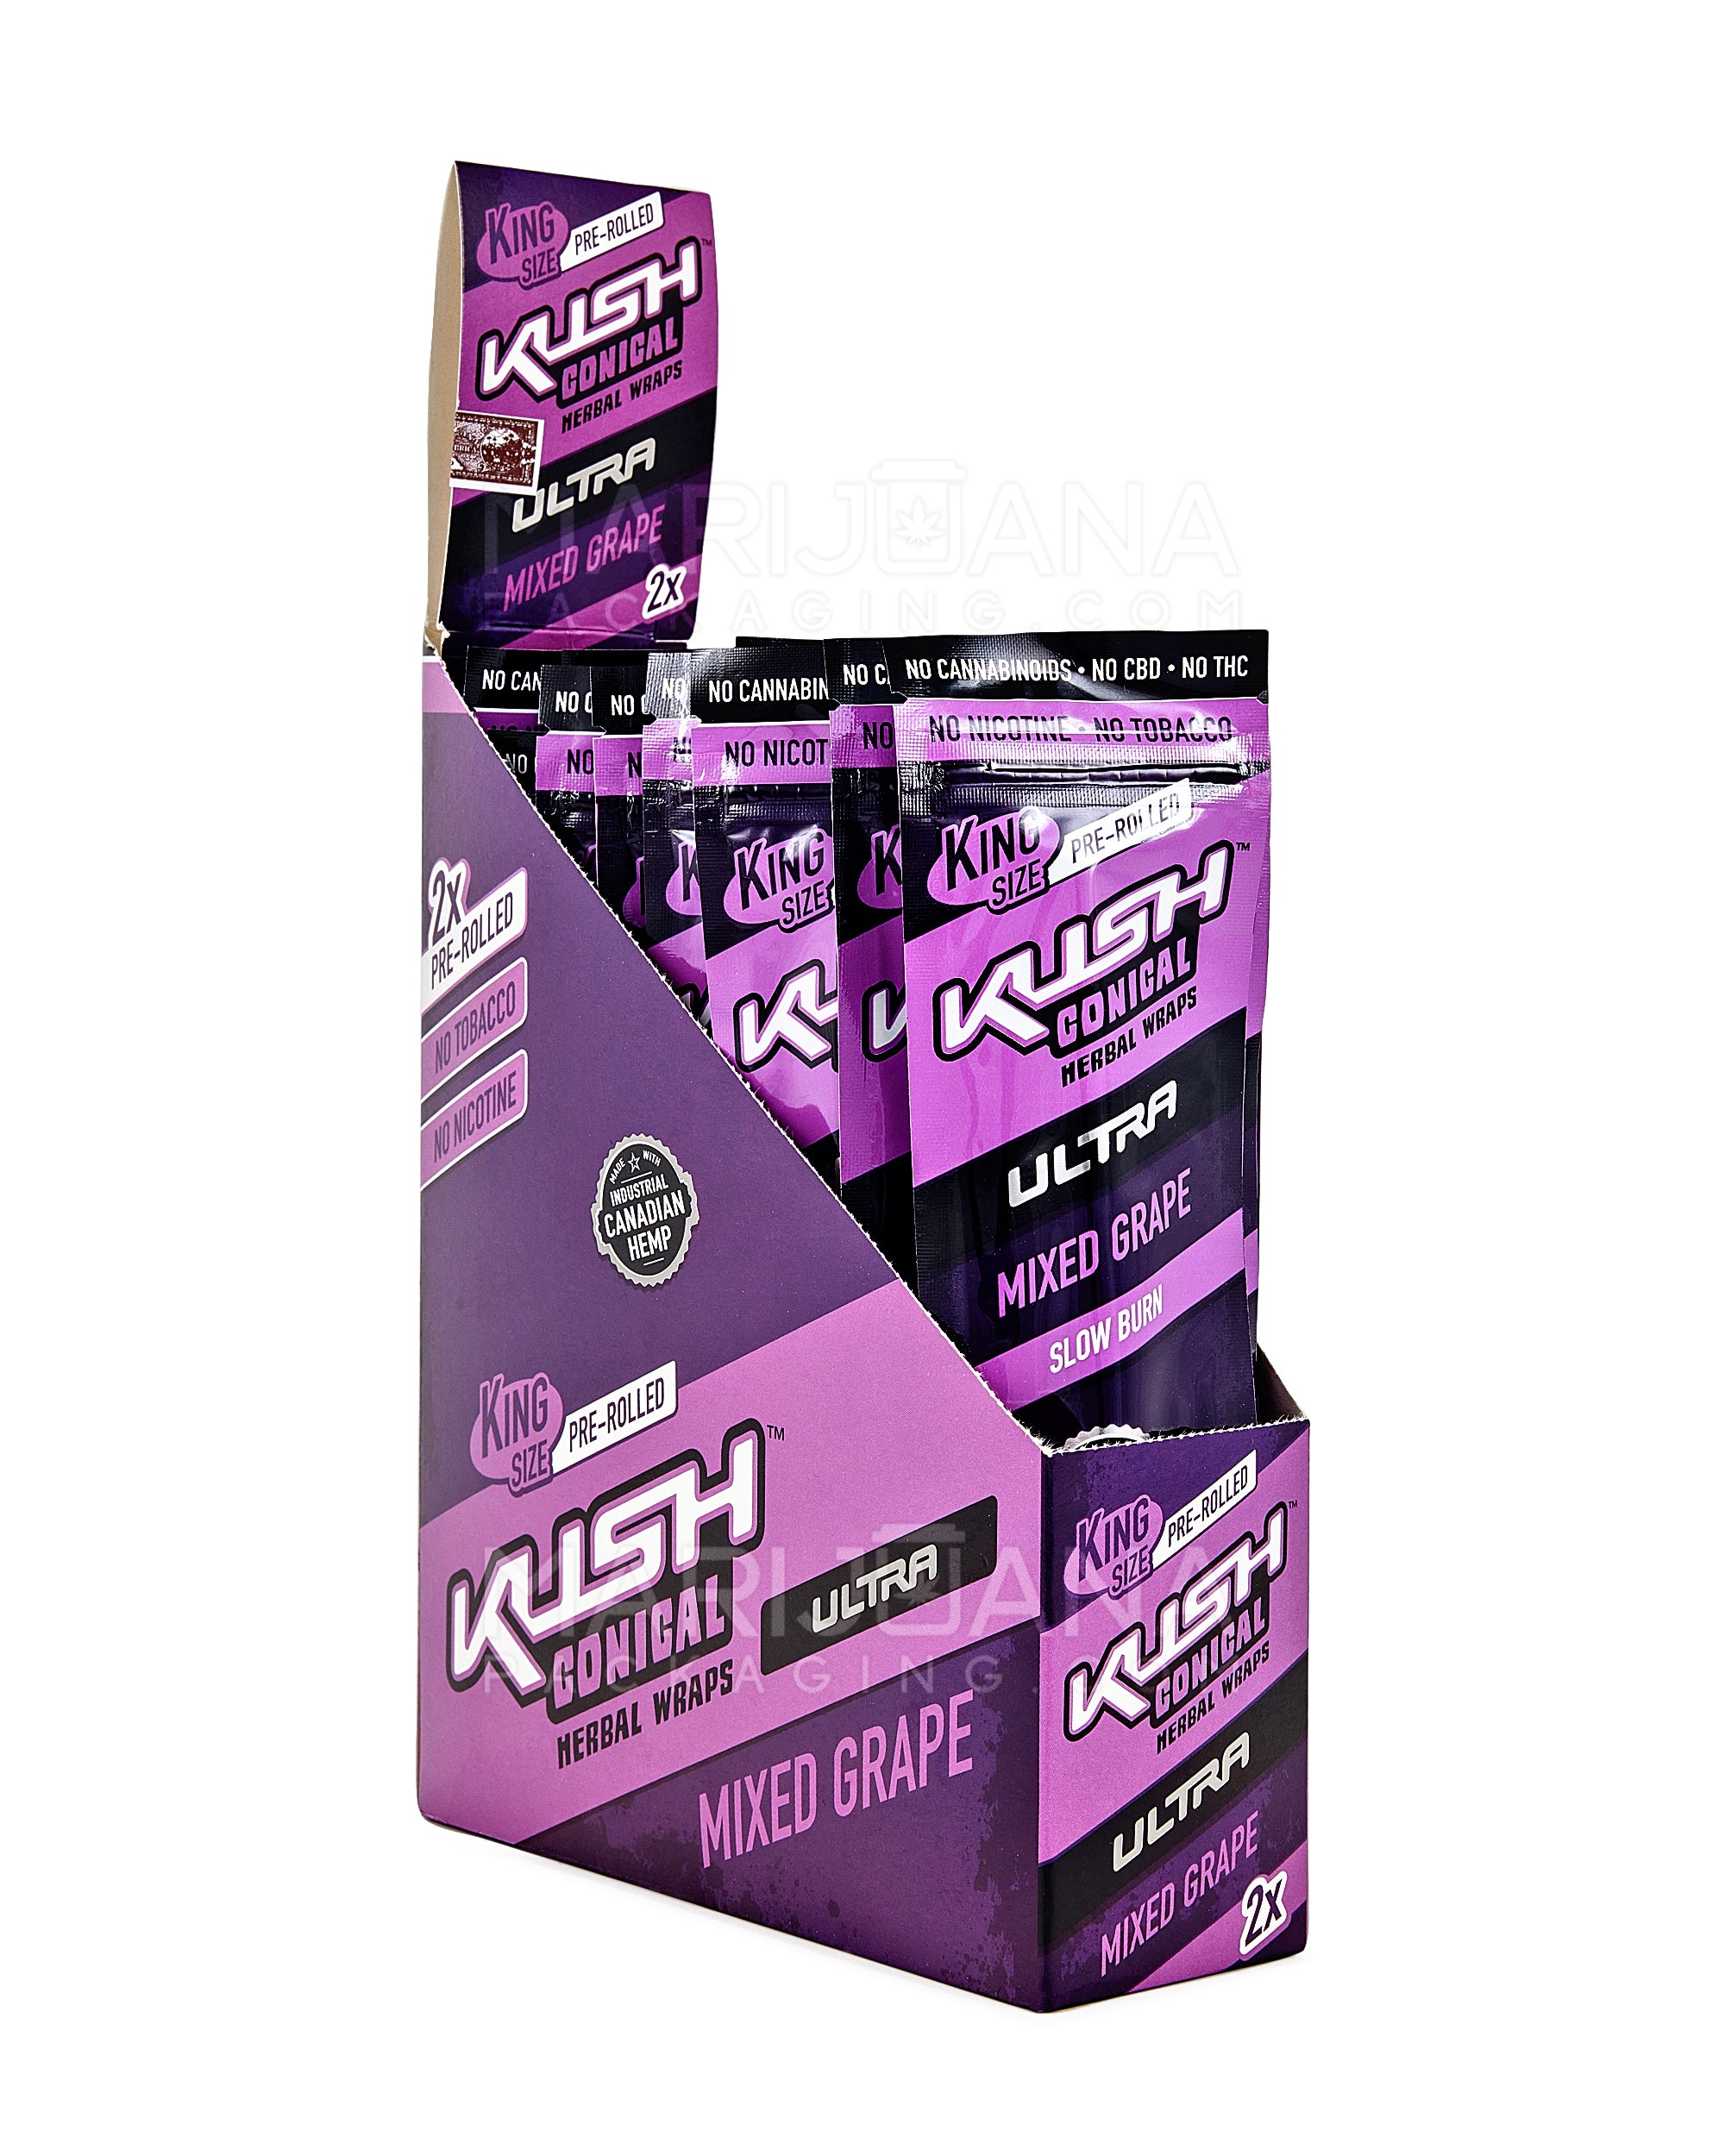 KUSH | 'Retail Display' Ultra Herbal Hemp Conical Wraps | 157mm - Mixed Grape - 15 Count - 1